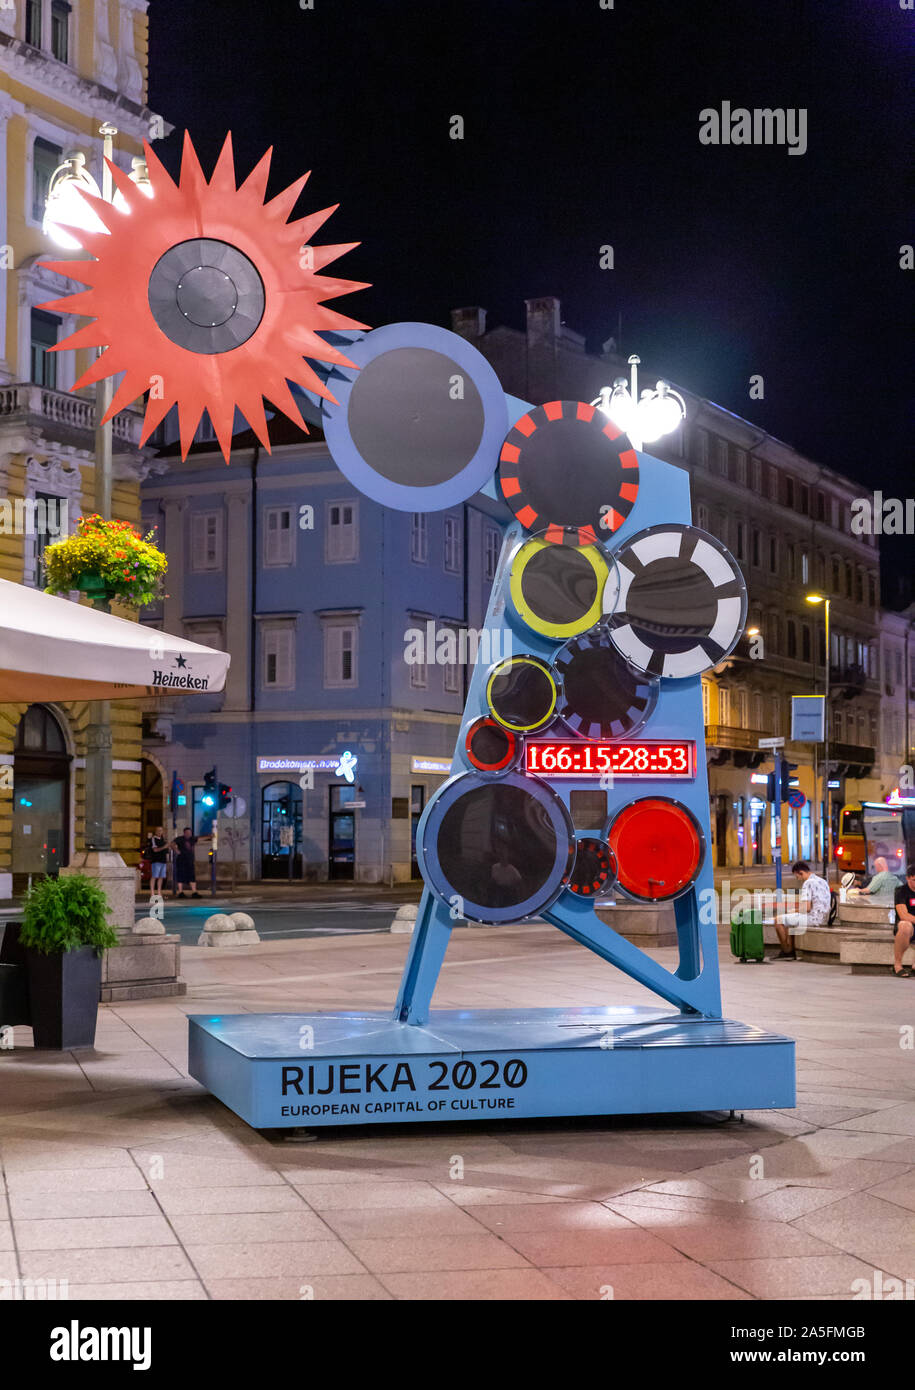 A 5 metre tall interactive countdown scultpure in Jadranski Trg square counting down to the start of Rijeka 2020 European Capital of Culture, Croatia. Stock Photo